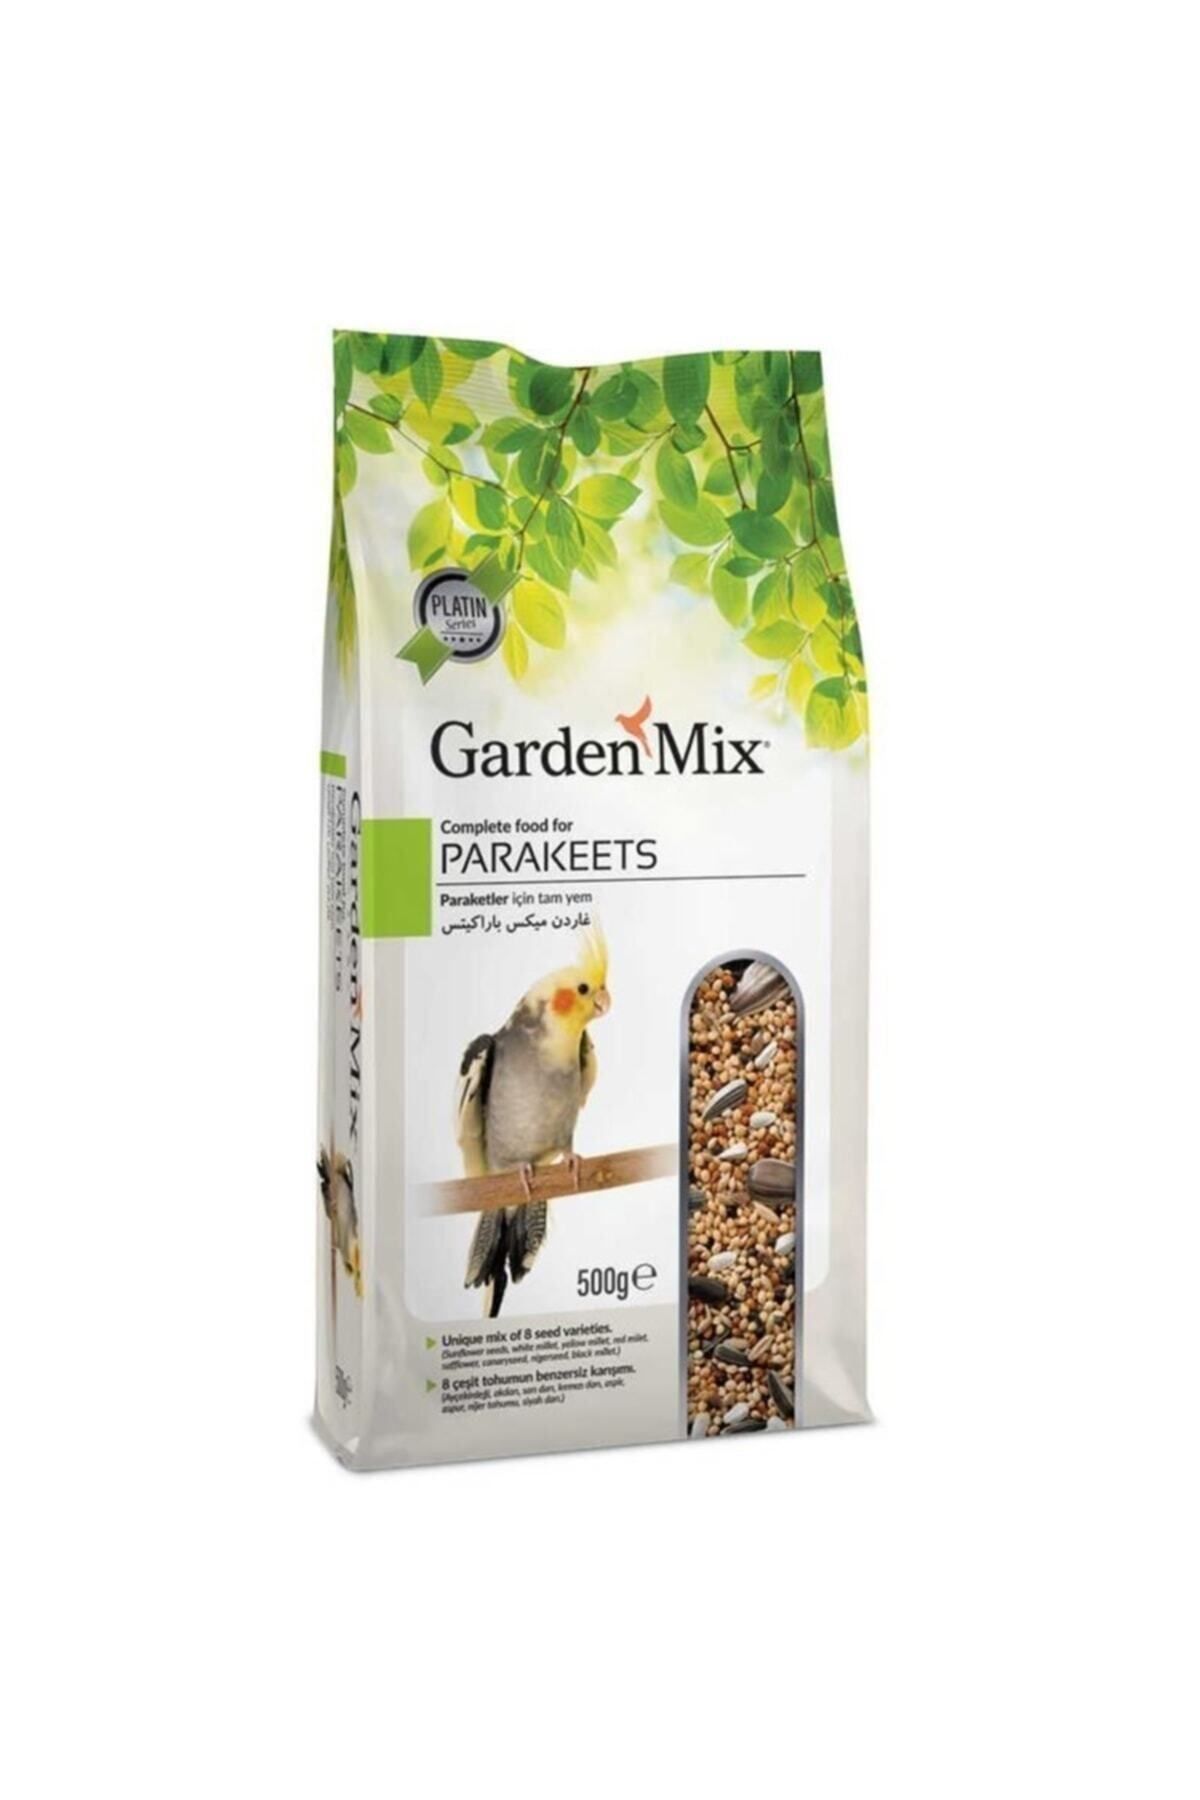 Gardenmix Garden Mix Platin Paraket Küçük Papağan Yemi 500 gr